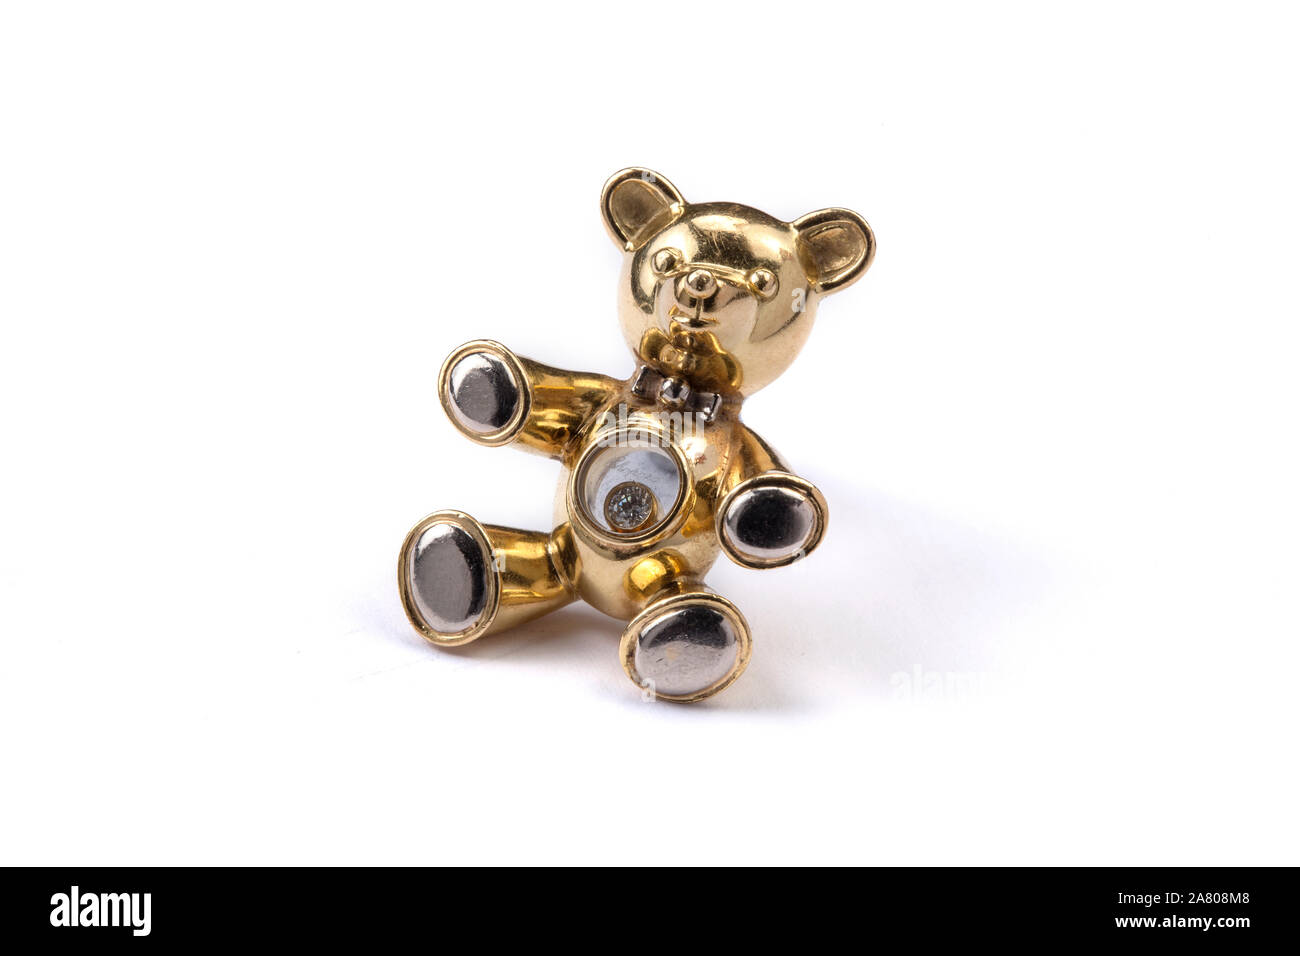 Gold teddy bear necklace pendant. Happy diamonds by Chopard Stock Photo